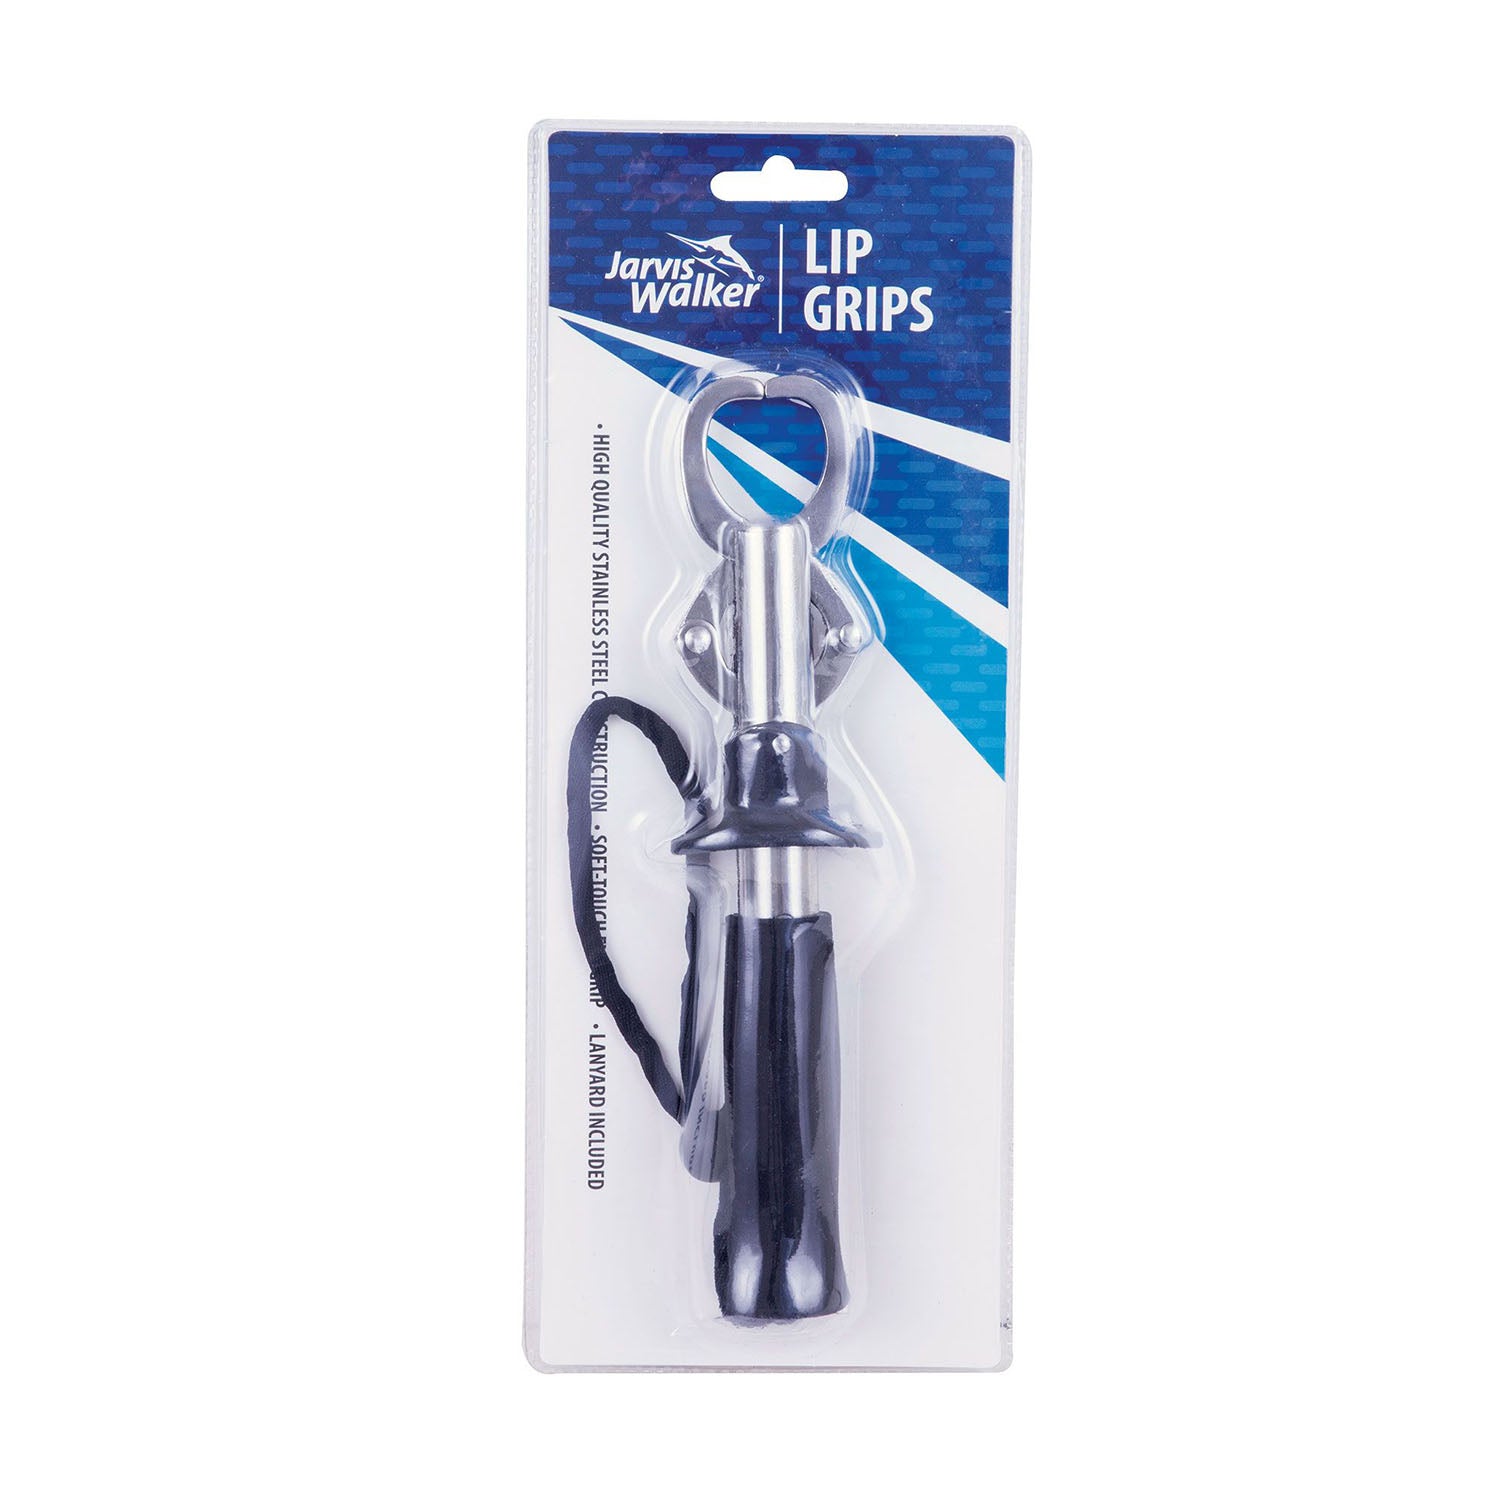 Pro Series Lip Grip Tool